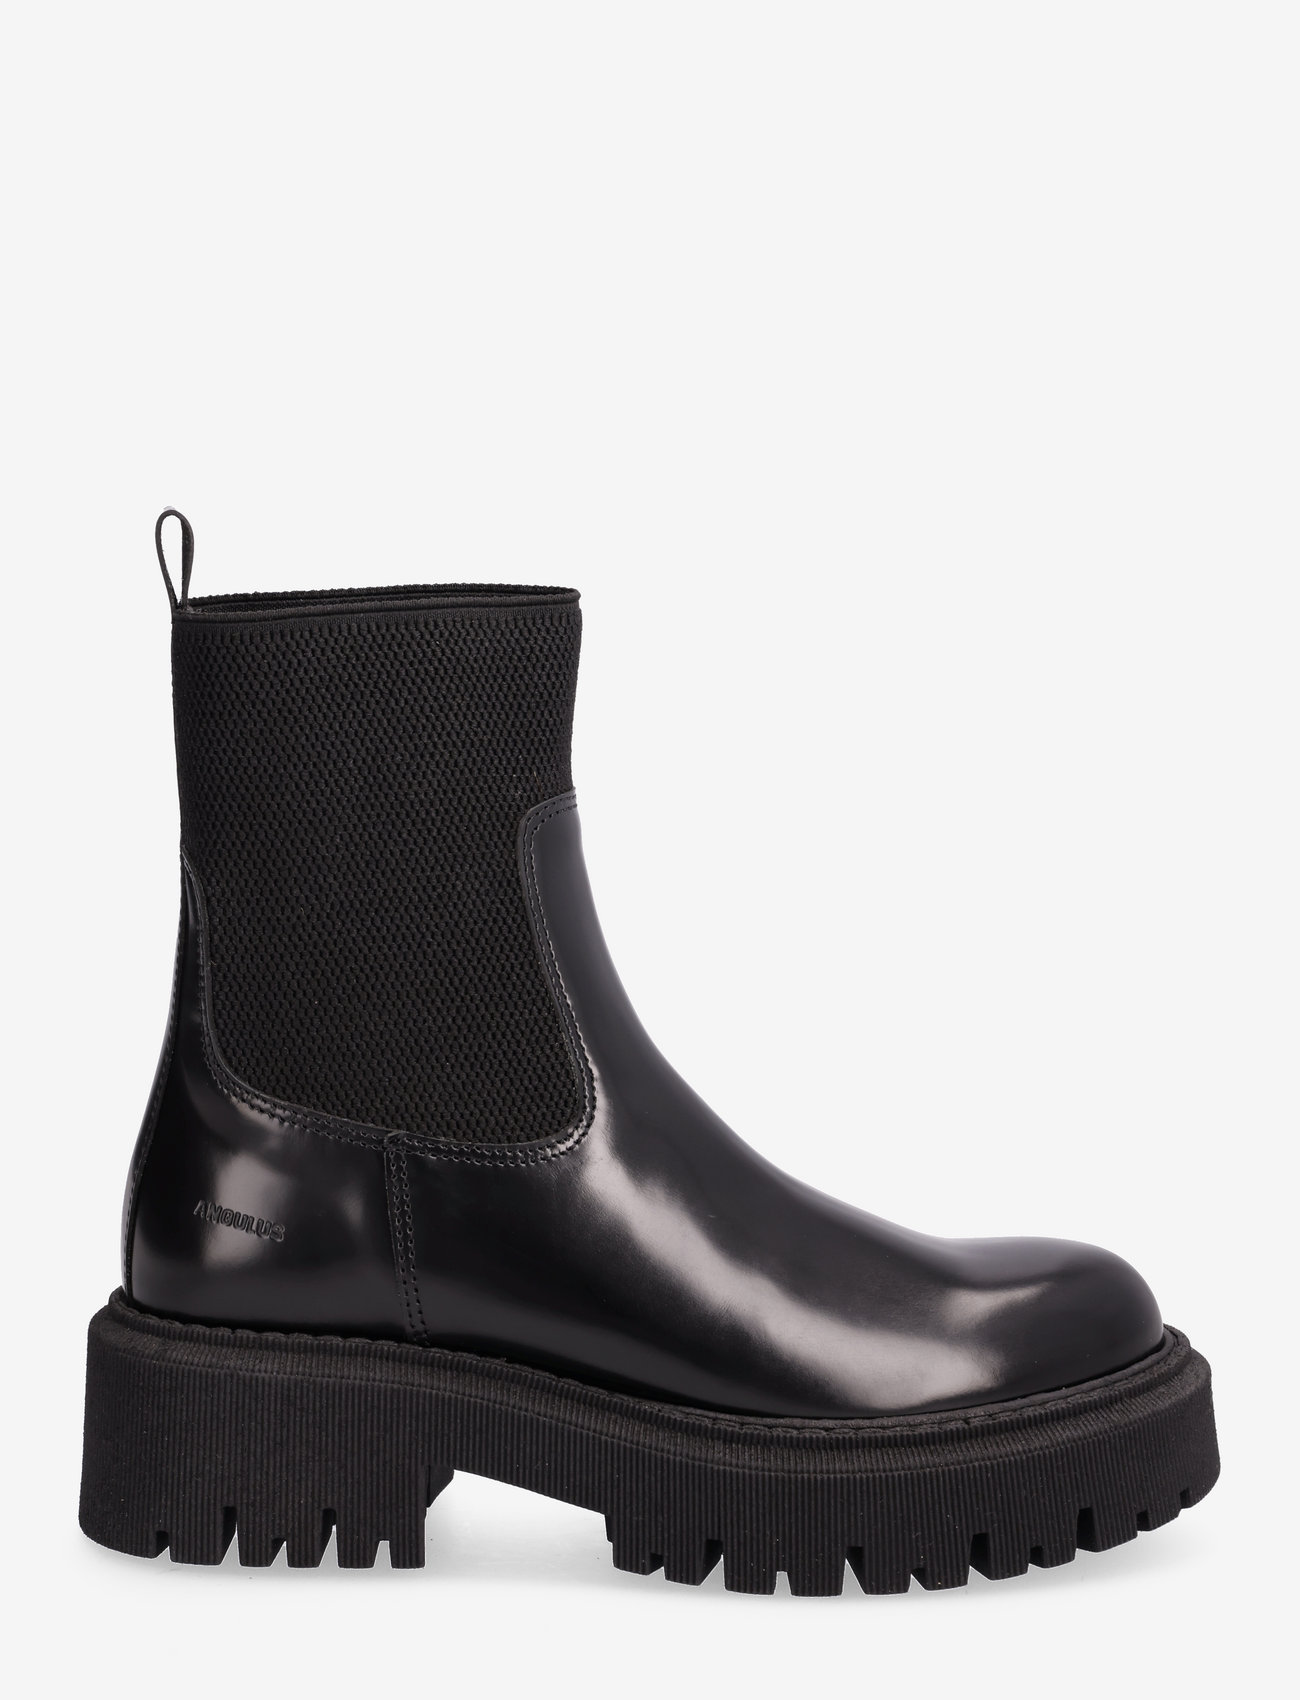 ANGULUS - Boots - flat - flat ankle boots - 1425/053 black/black - 1